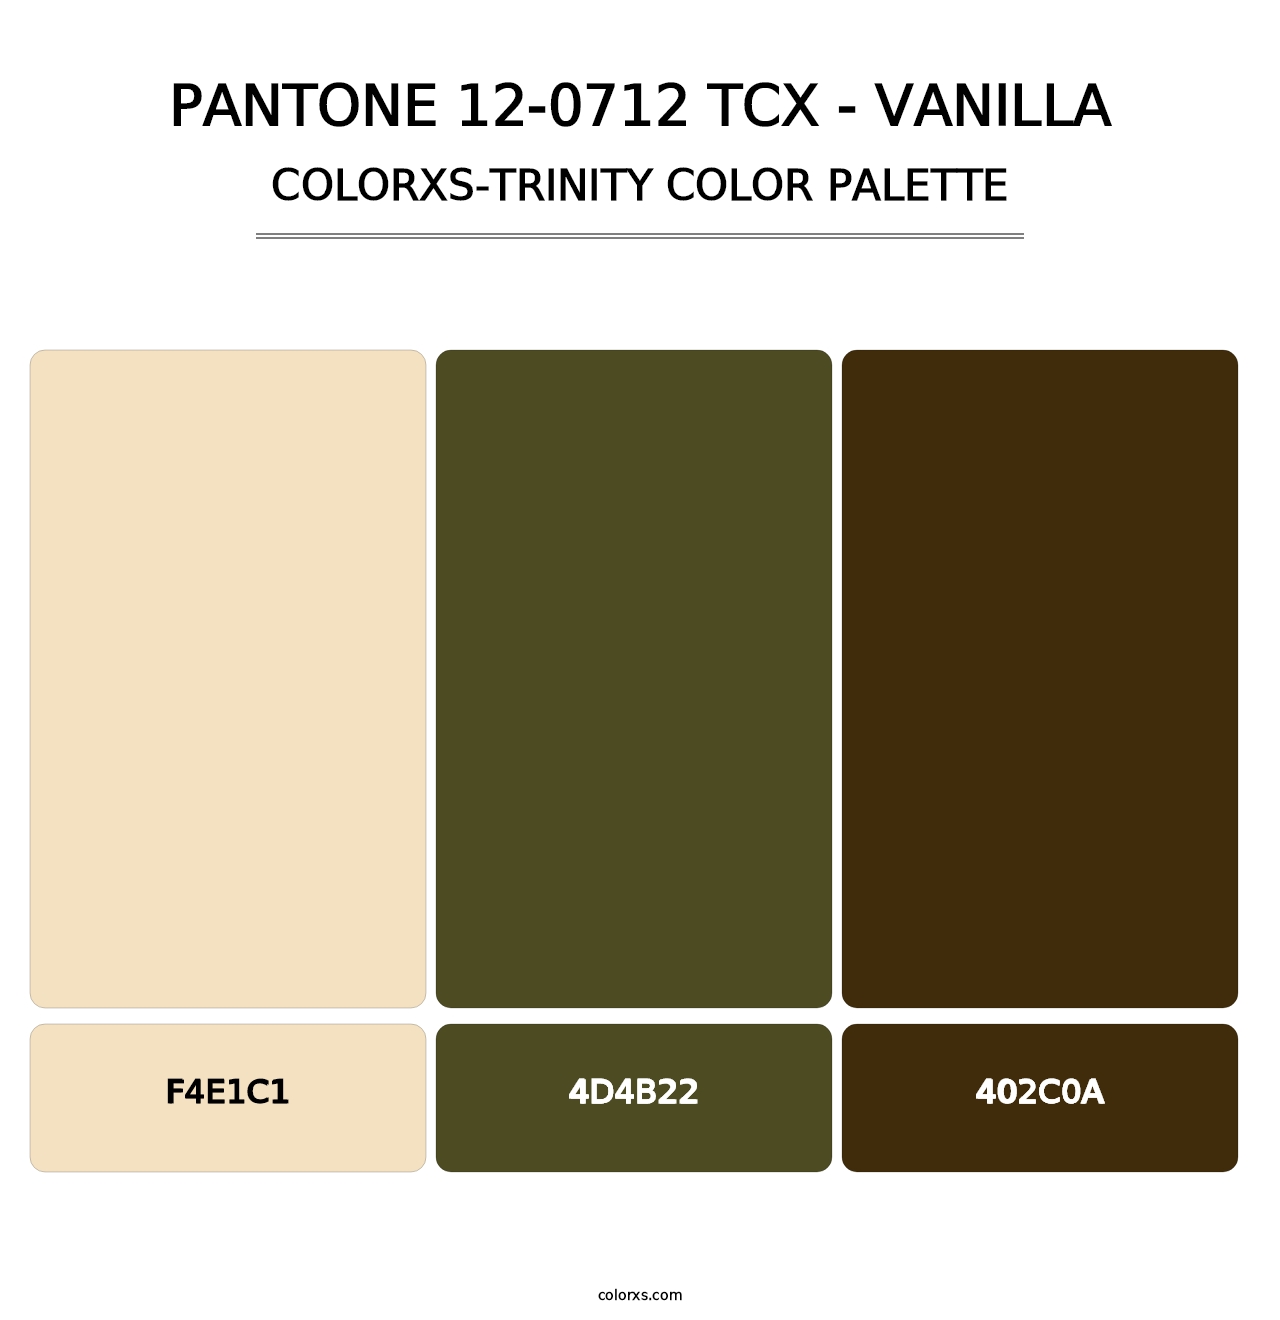 PANTONE 12-0712 TCX - Vanilla - Colorxs Trinity Palette